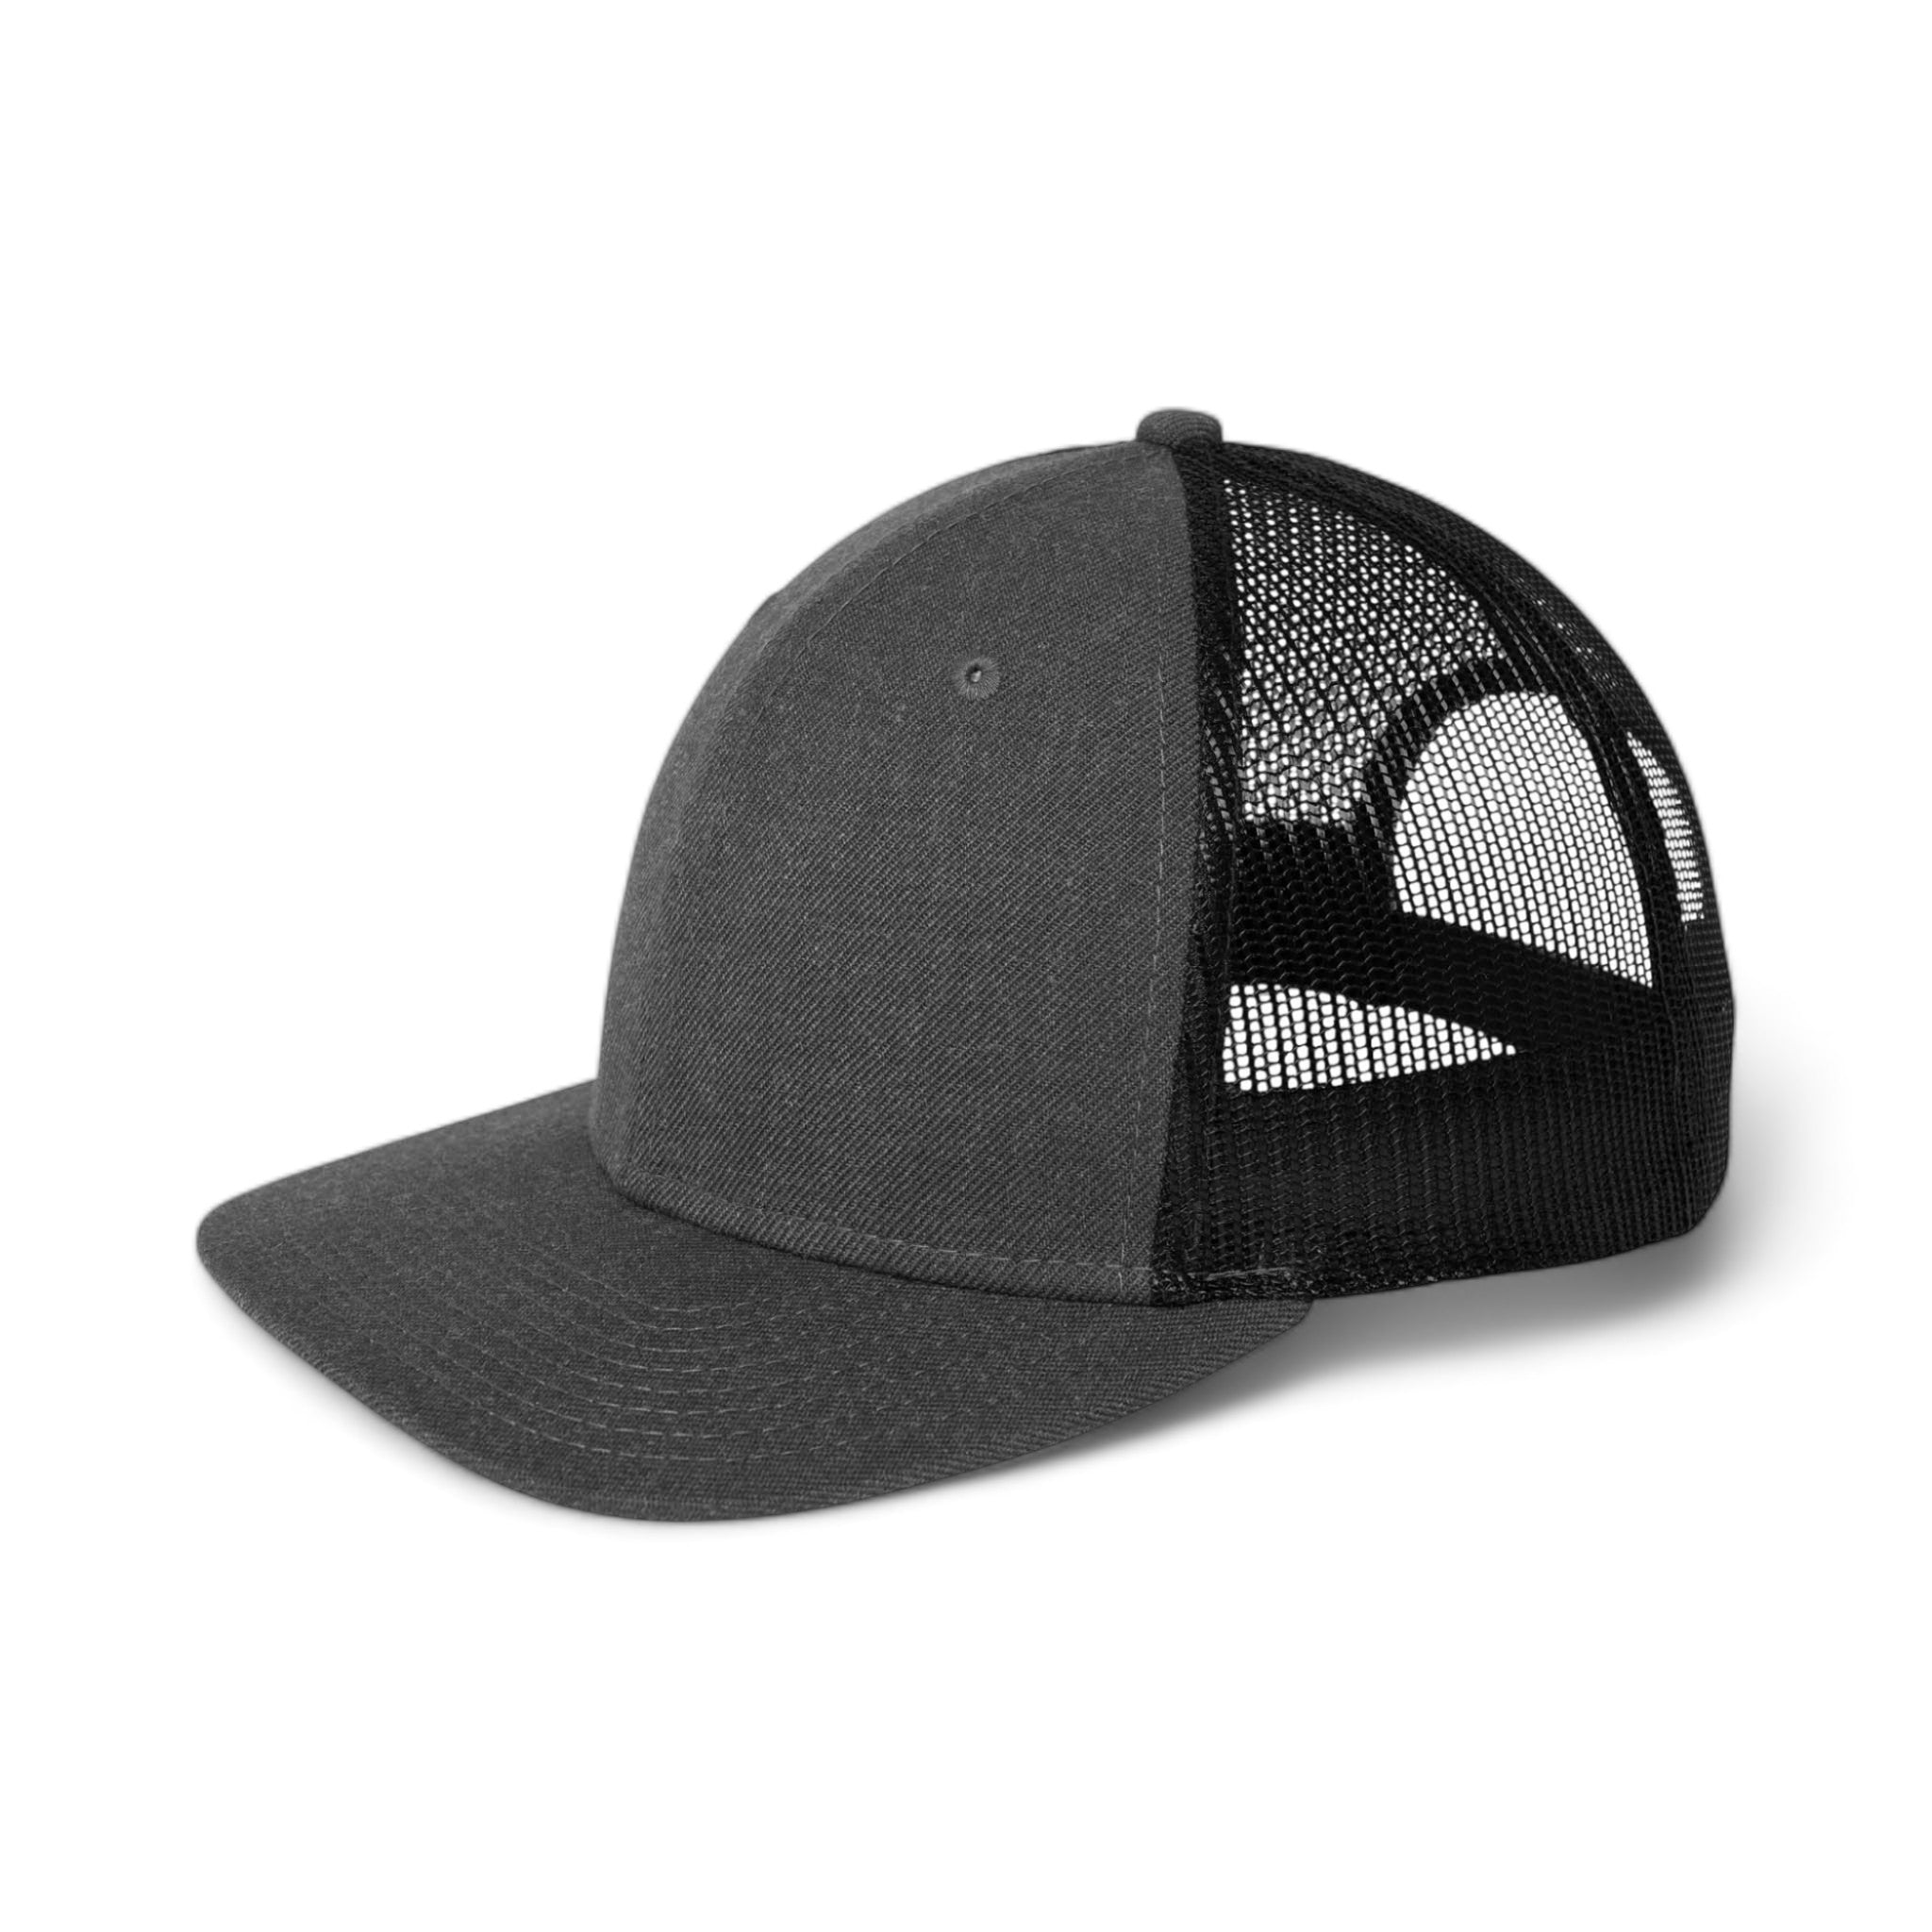 Side view of New Era NE207 custom hat in heather graphite and black